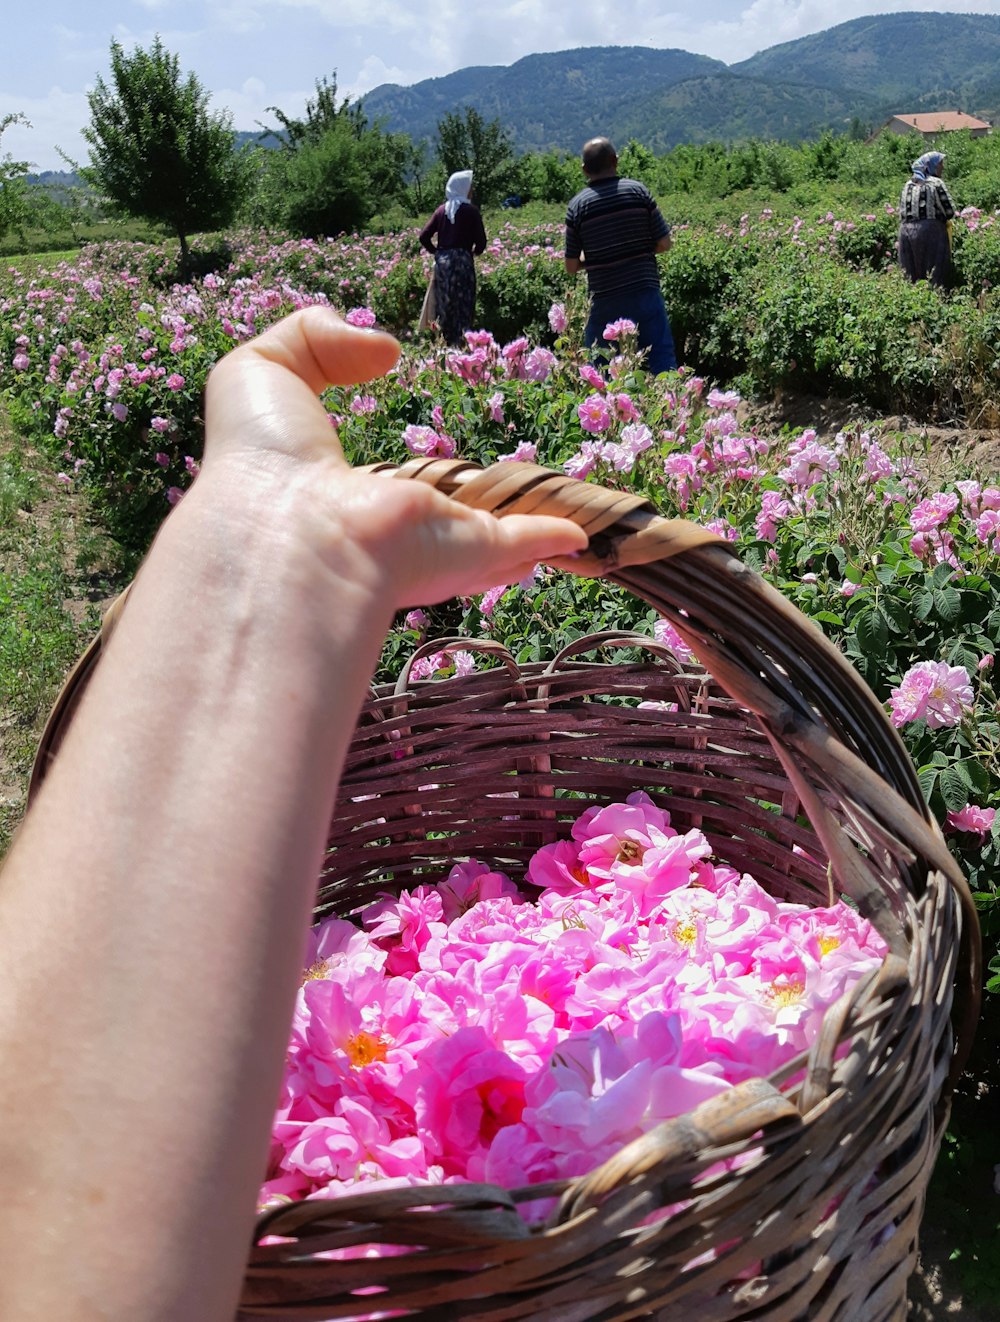 person holding basket of pink flowers photo – Free Turkey Image on Unsplash